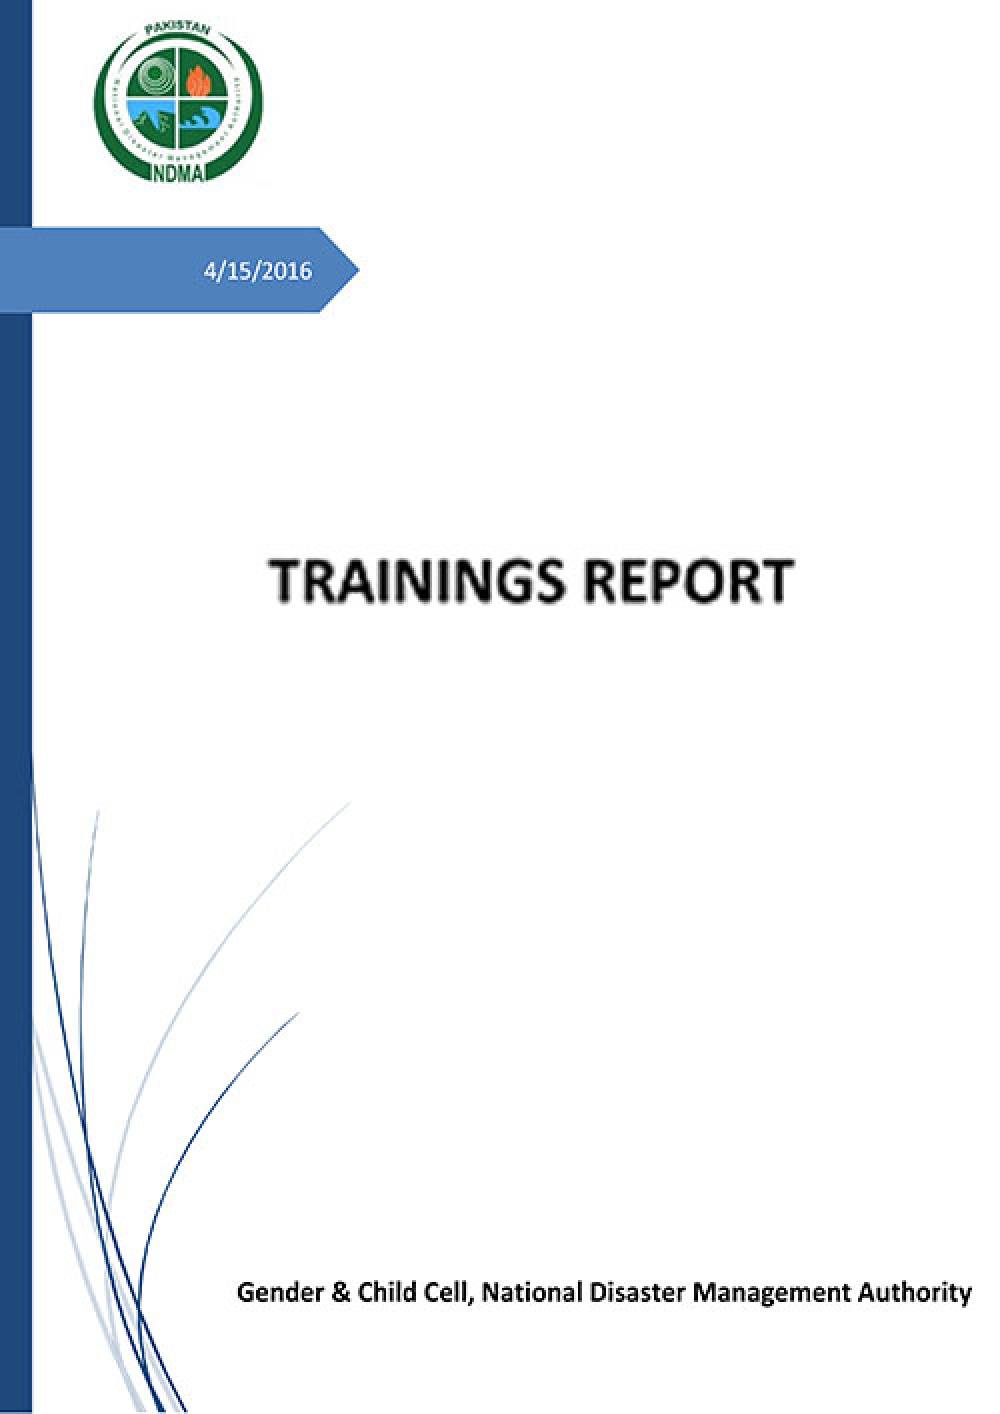 Post Training Report